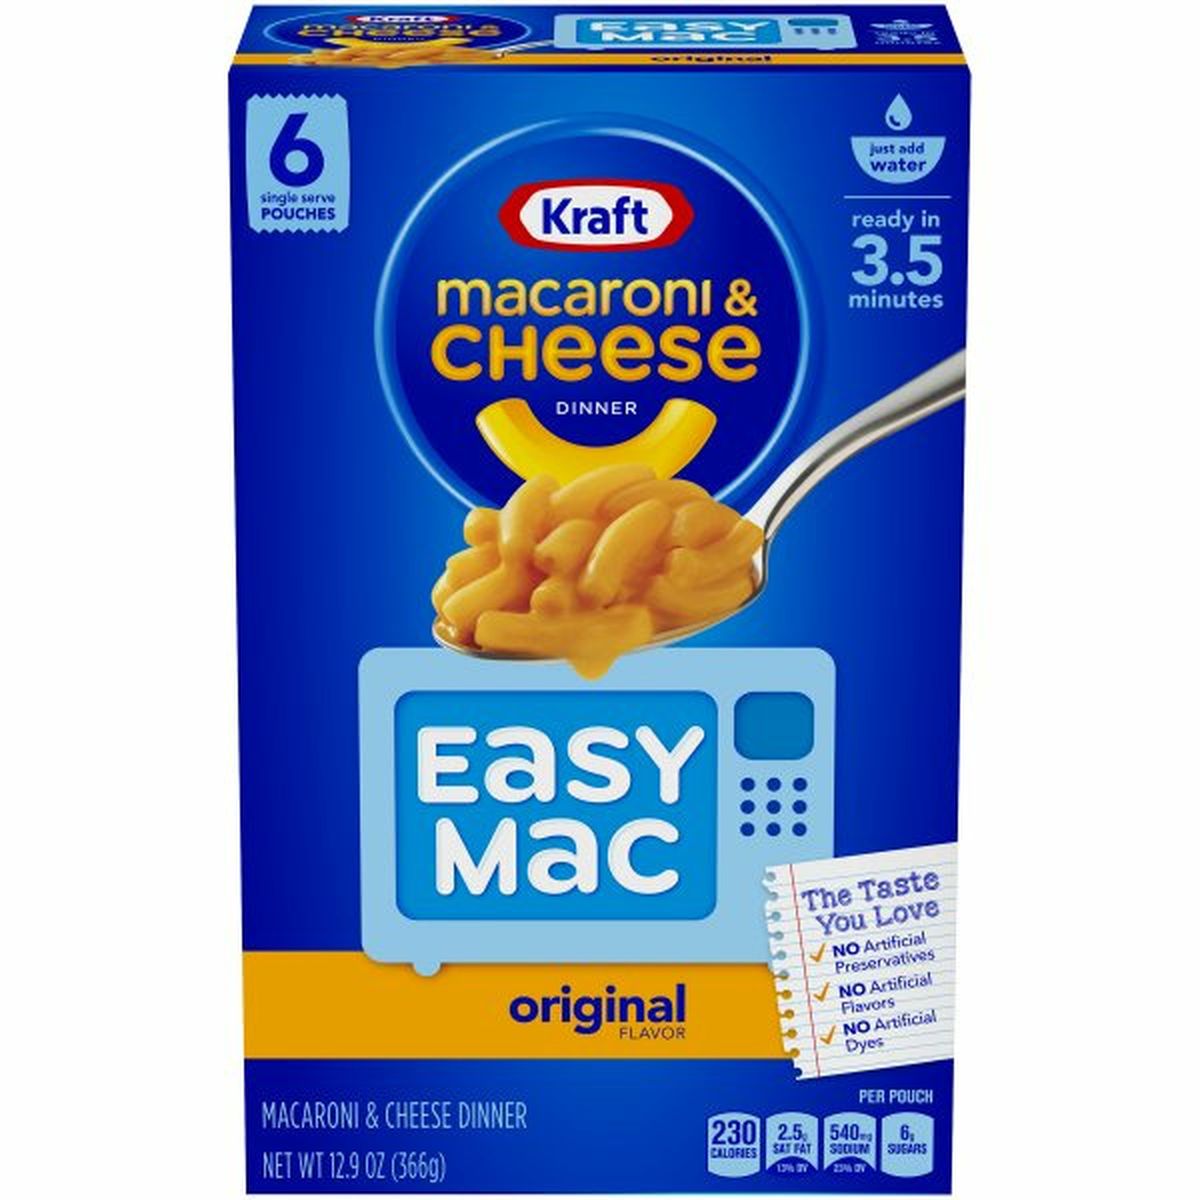 Calories in Kraft Easy Mac Original Flavor Macaroni & Cheese Dinner